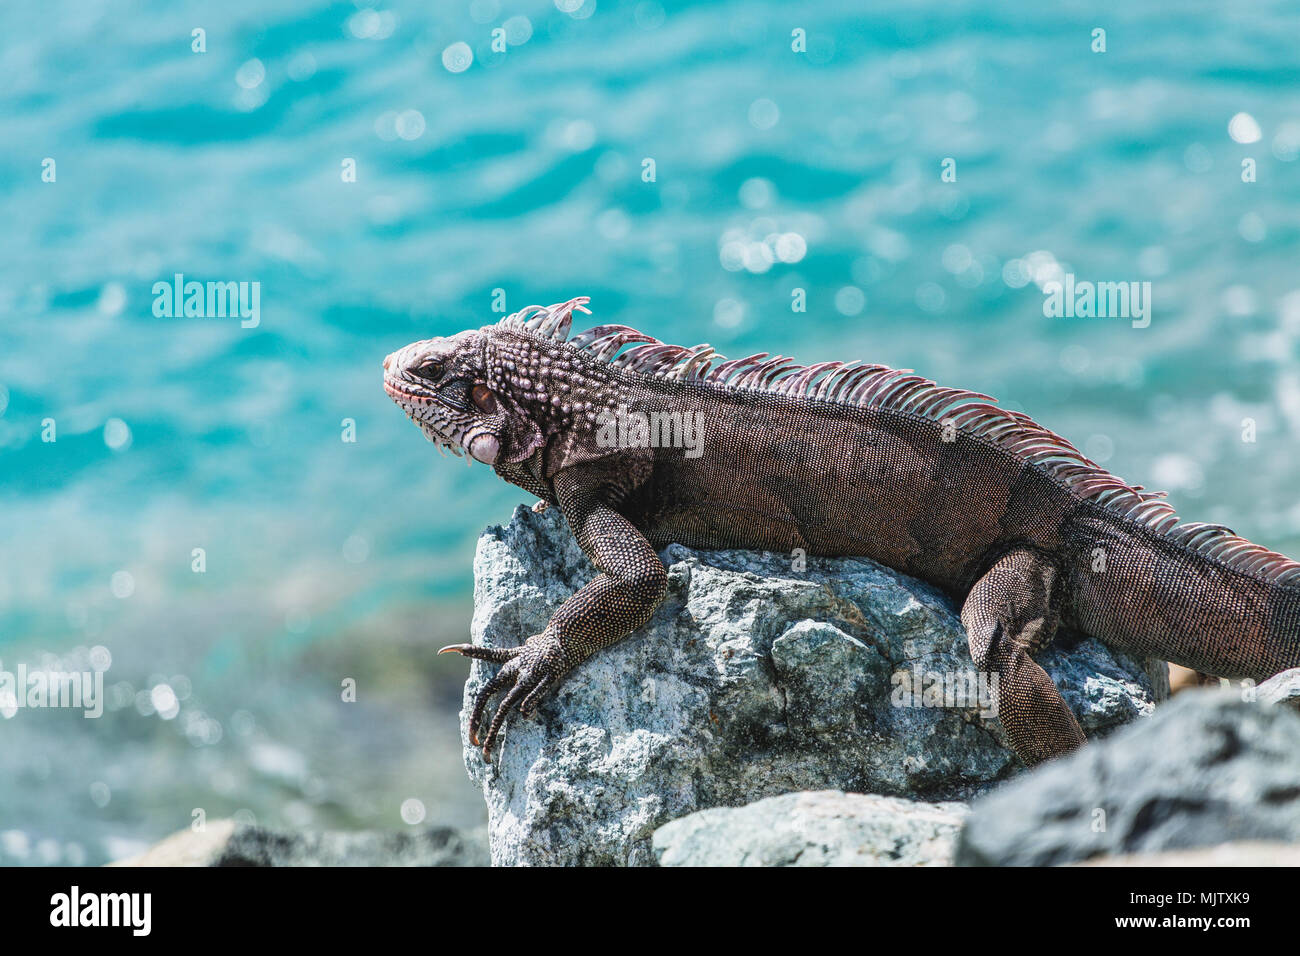 An iguana sunning on the rocks by the sea Stock Photo